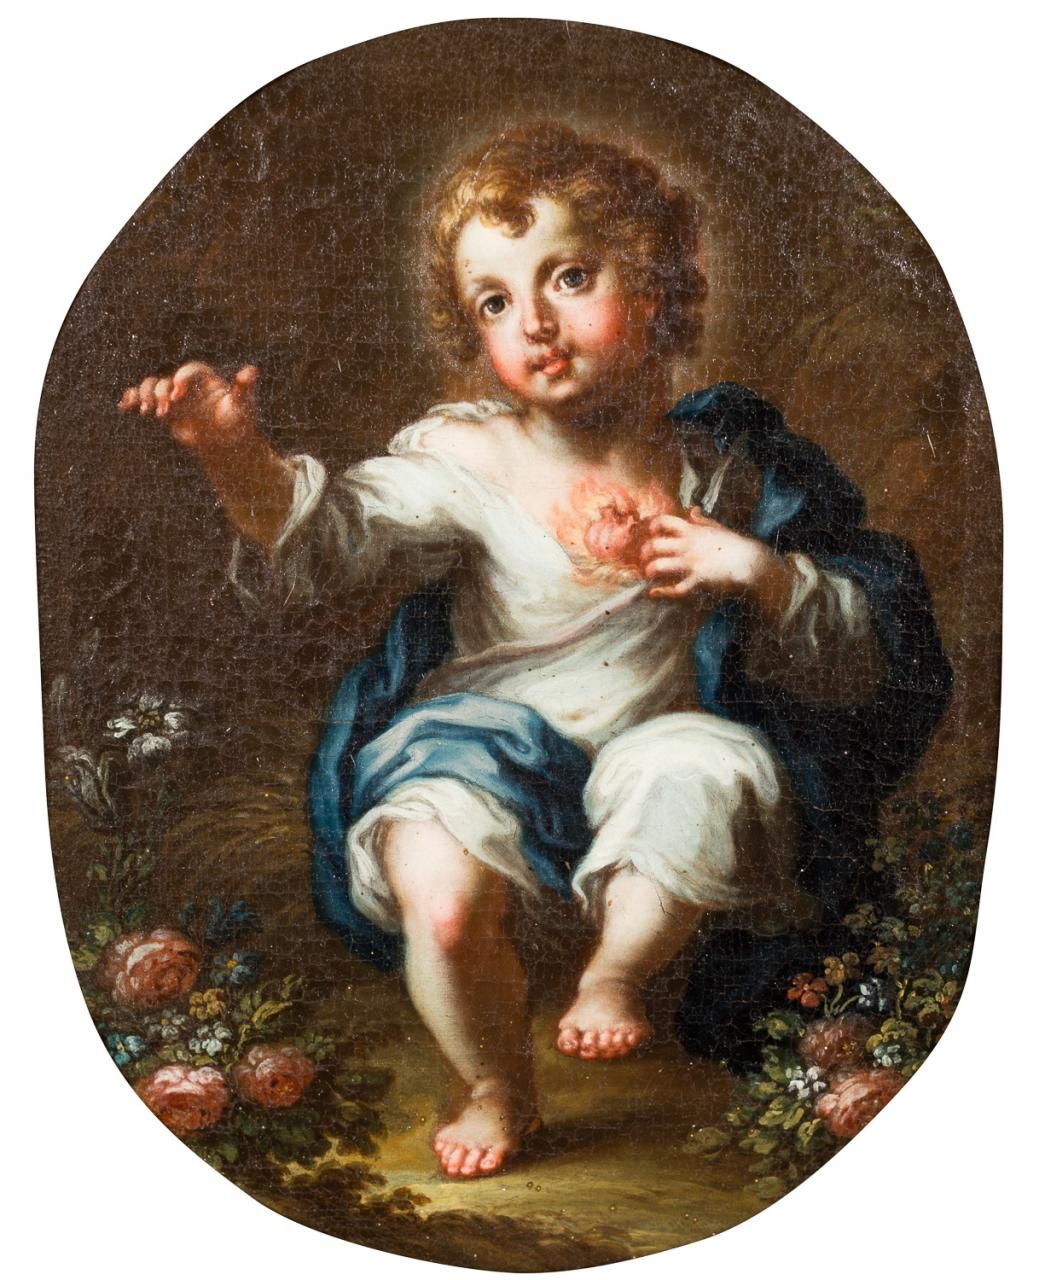 ATRIBUIDO A VITTO D'ANNA (Palermo, 1718 - 1769) 儿童耶稣的圣心
布面油画
34 x 26 cm